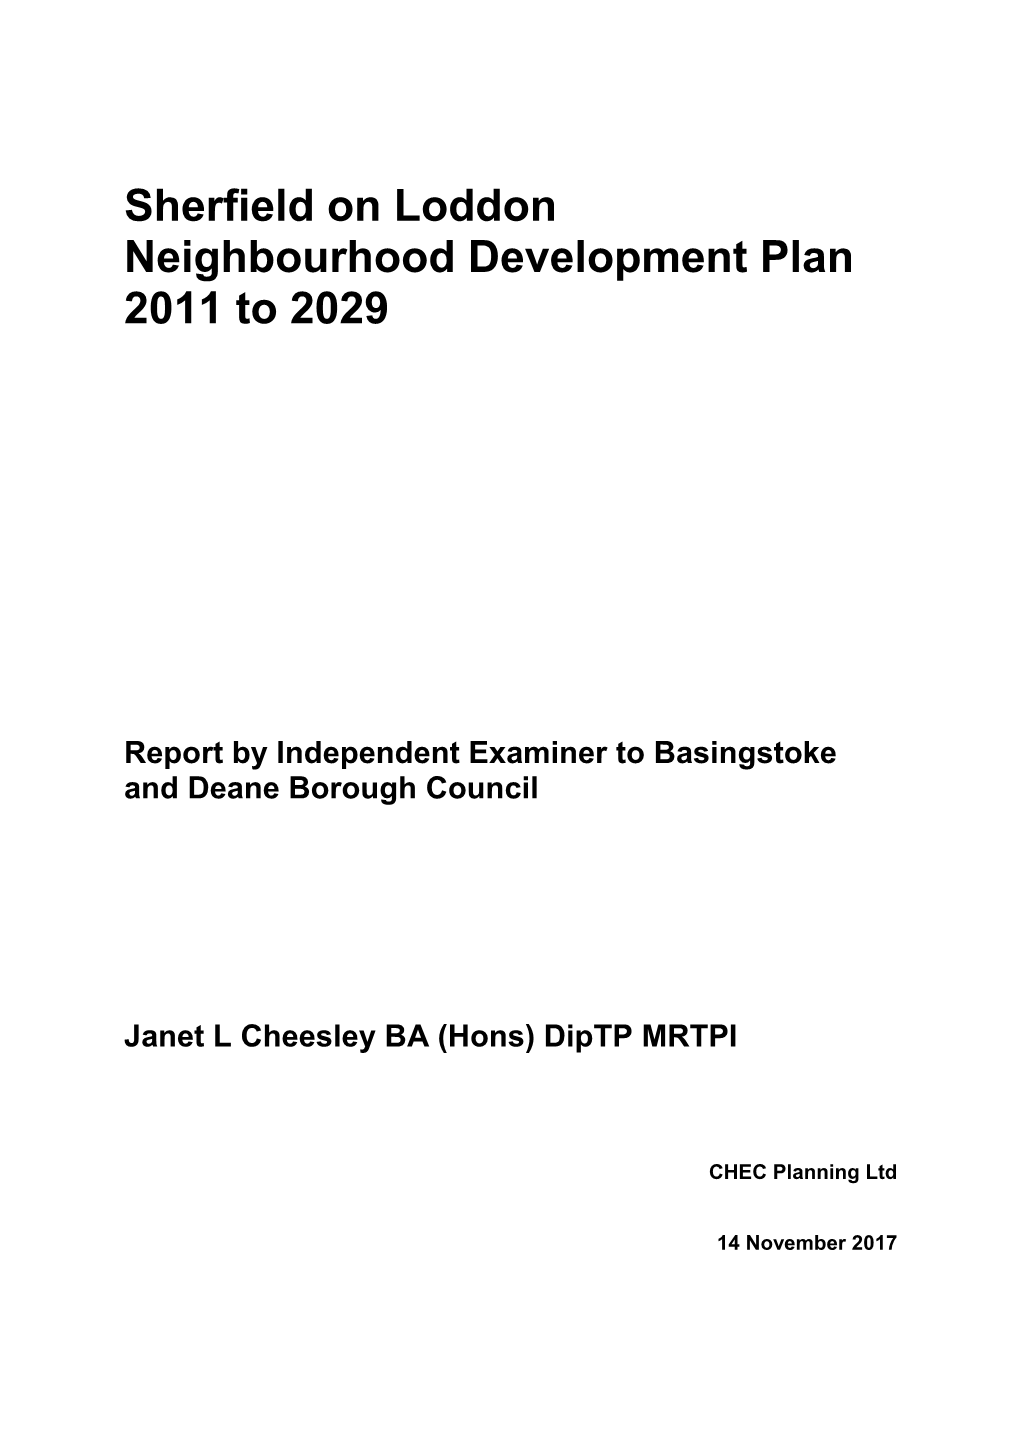 Sherfield on Loddon Neighbourhood Development Plan Examiner's Report